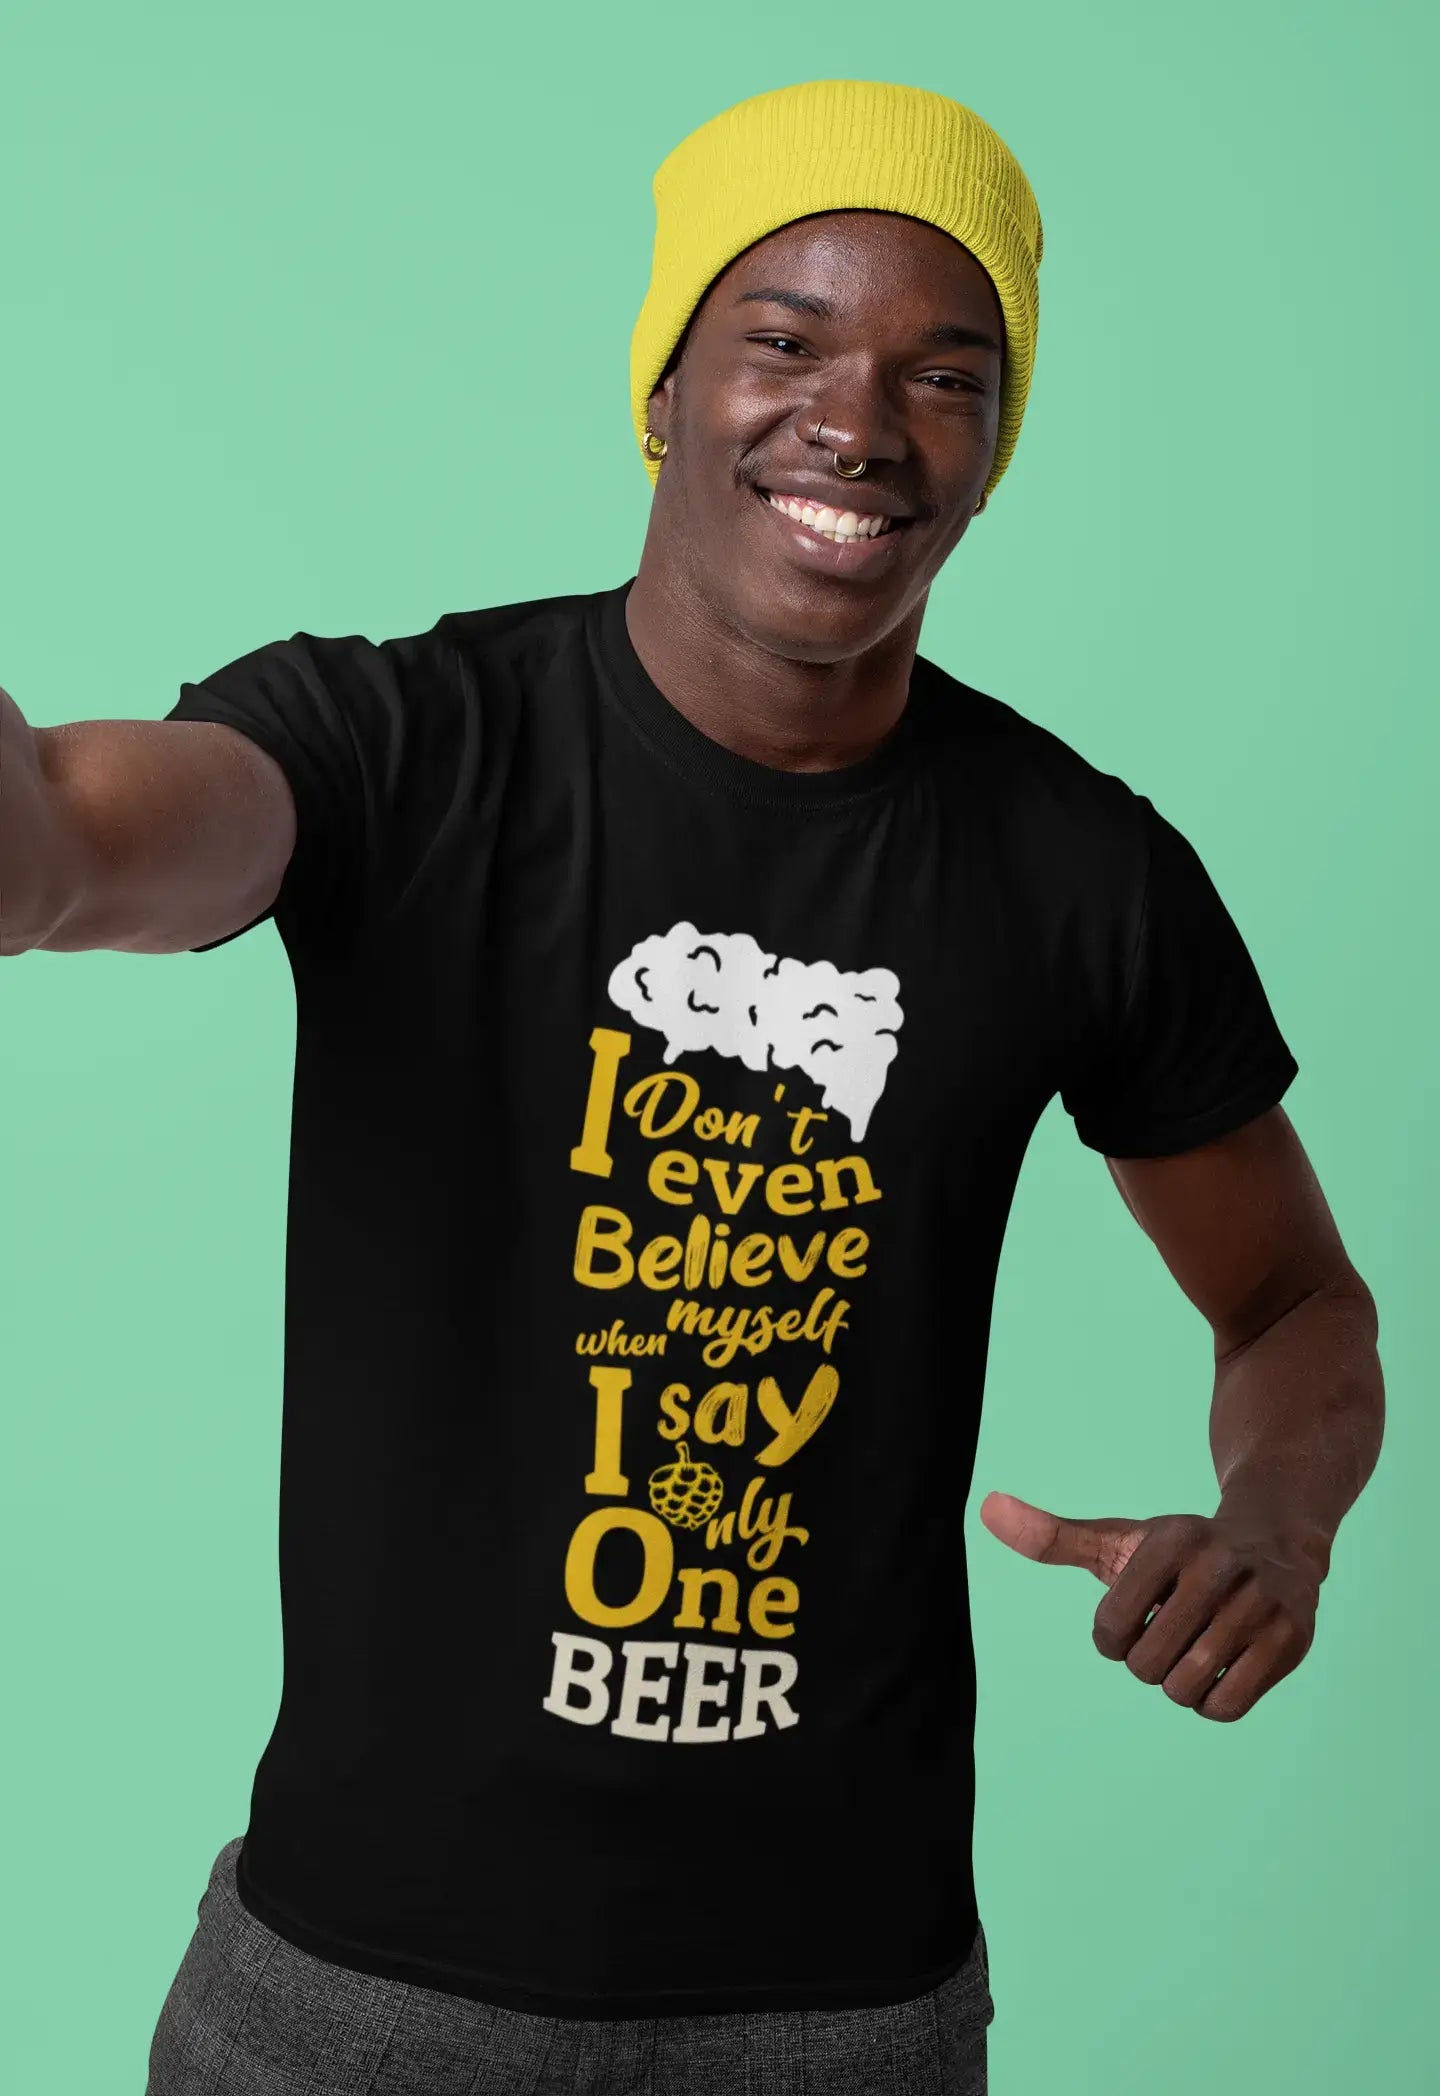 ULTRABASIC Herren-T-Shirt „I Don't Even Believe Myself When I Say Only One Beer“ – Bierliebhaber-T-Shirt